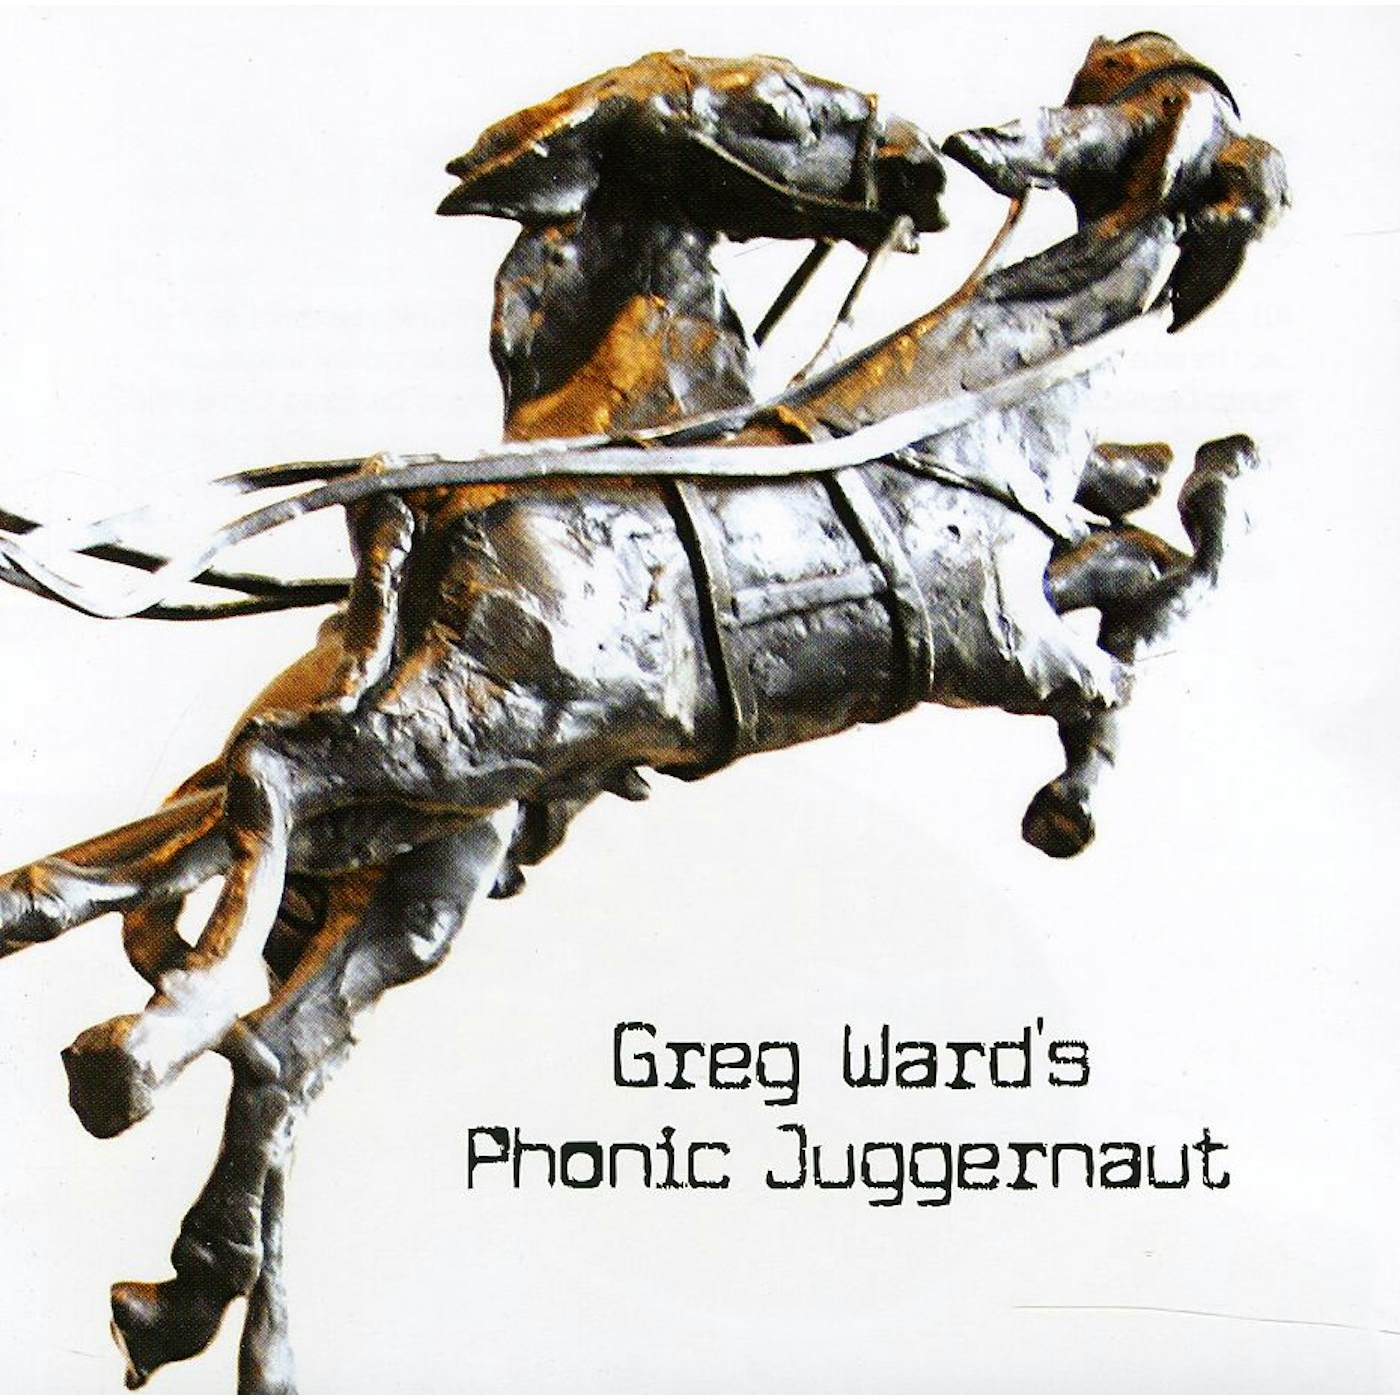 GREG WARD'S PHONIC JUGGERNAUT CD